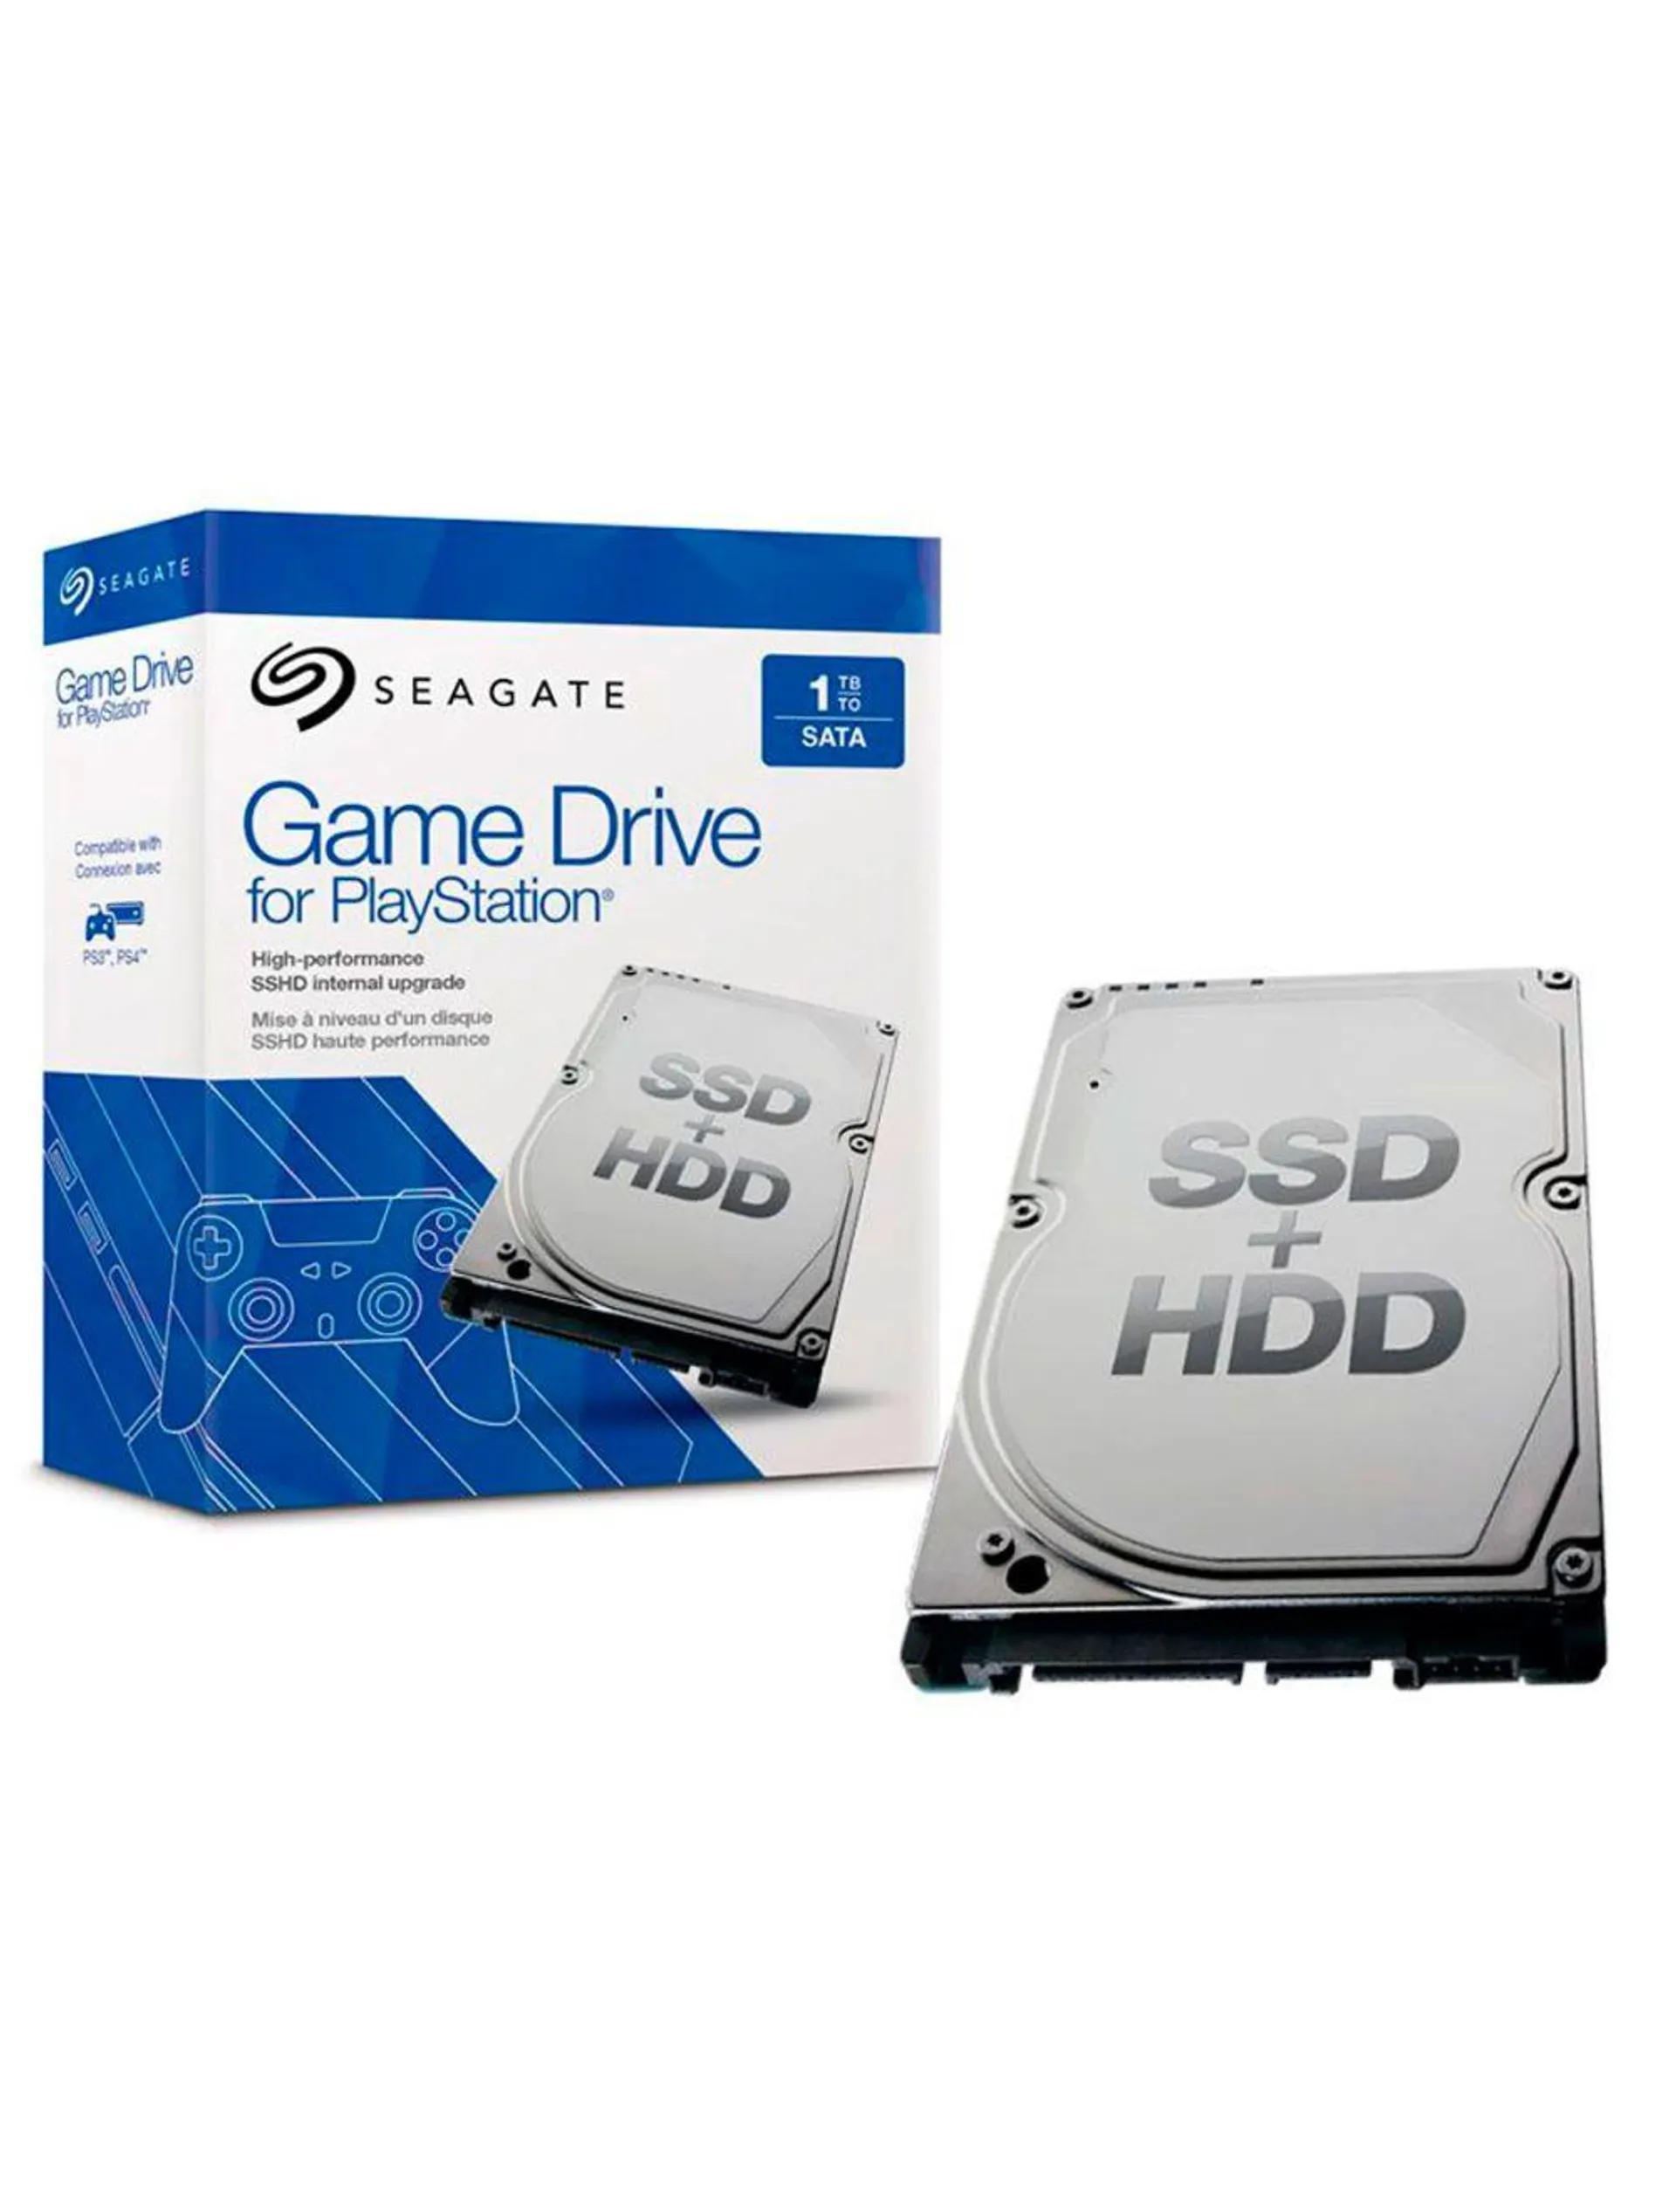 1 TB 2.5 External Hybrid Hard Drive (PS4 compatible)